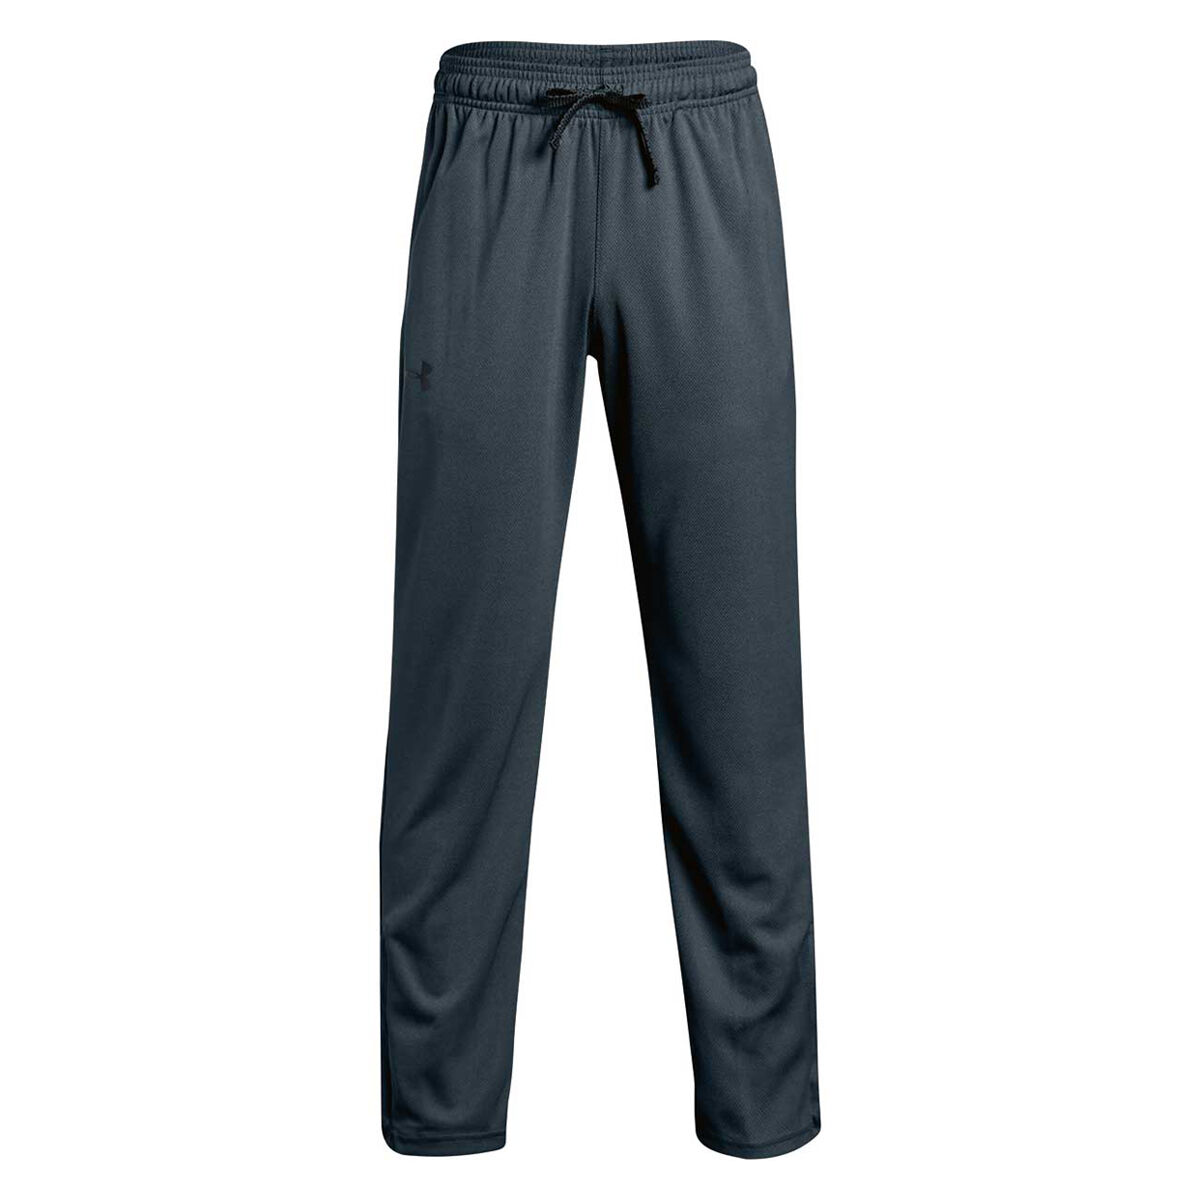 Ua Tech Pants Order Ad49c E9943 - boys roblox sweatpants casual athletic clothing jogger running pants black grey